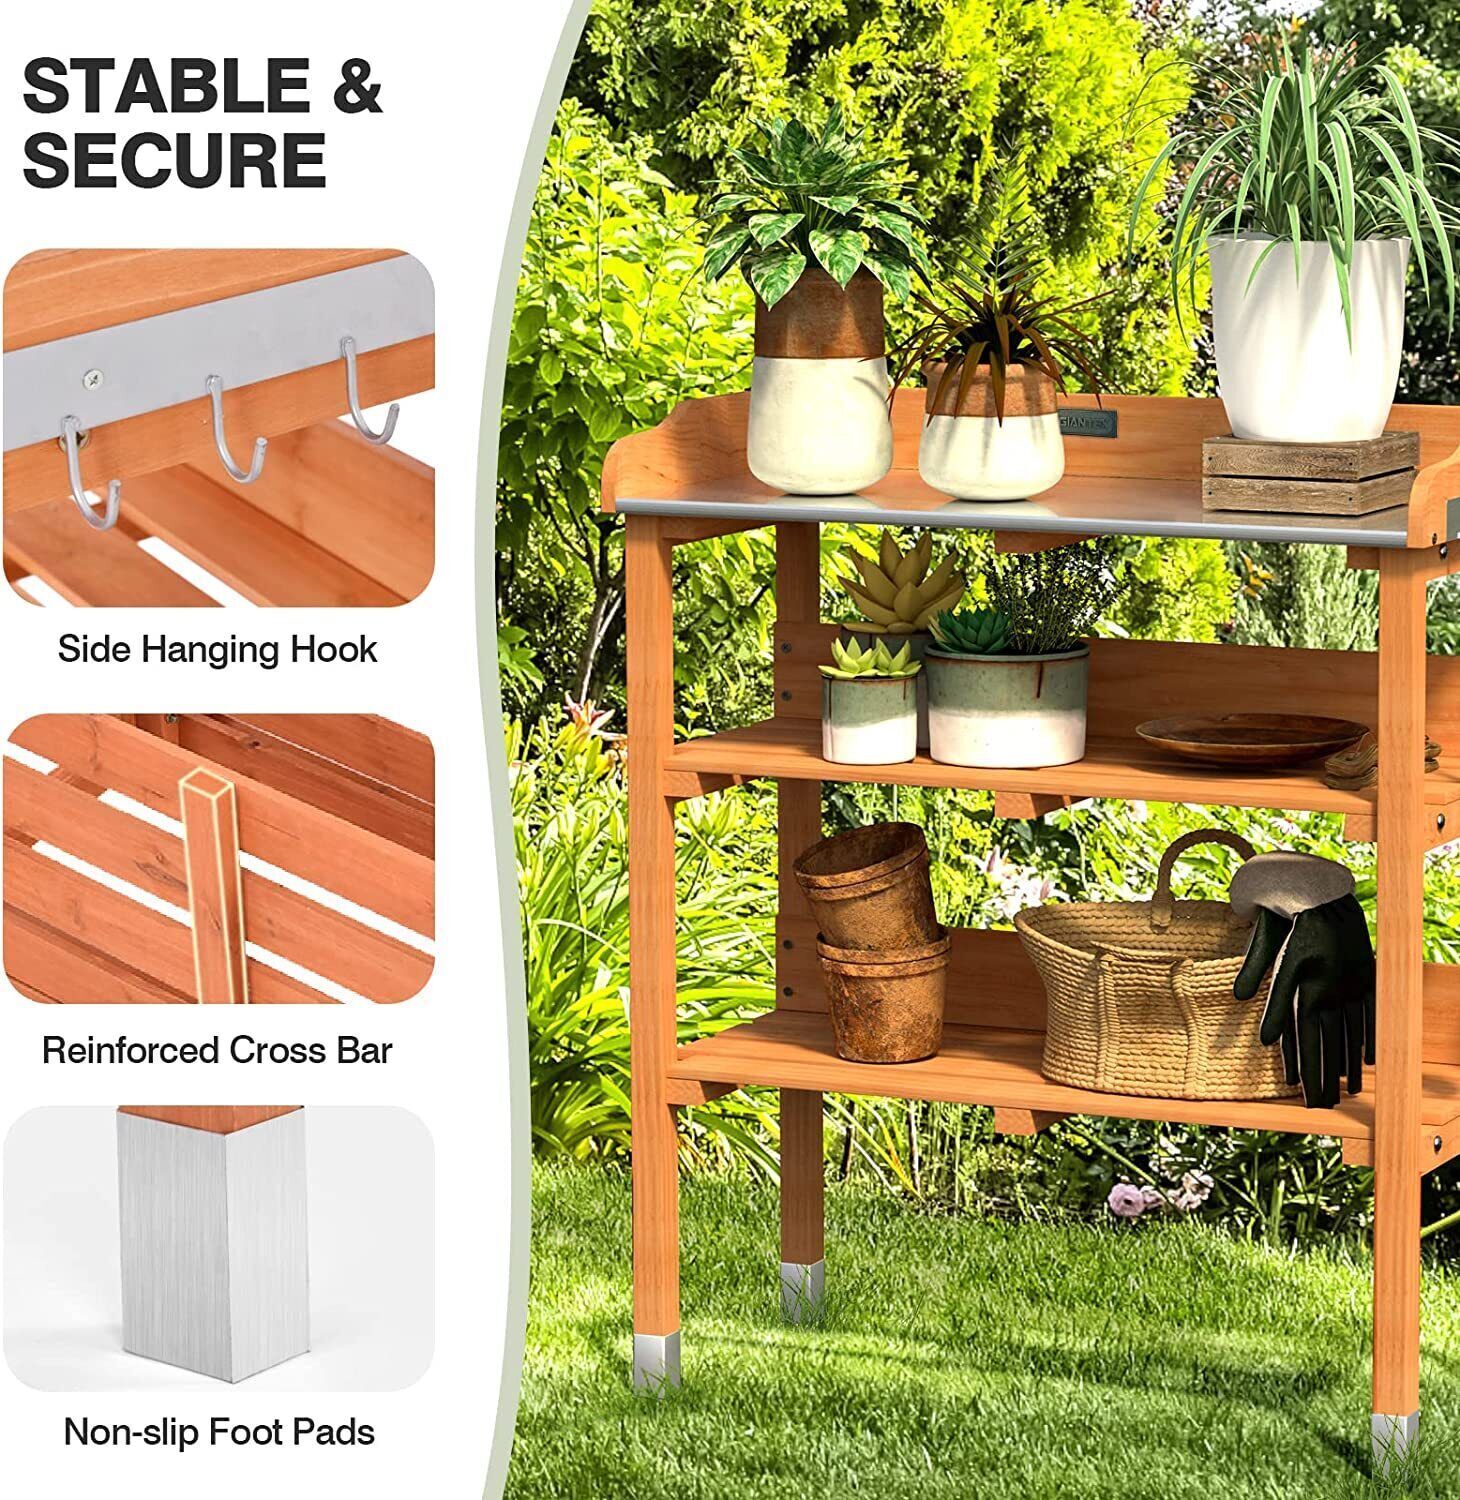 Outdoor Garden Wooden Potting Bench Work Station Table Tool W/Hook Storage Shelf